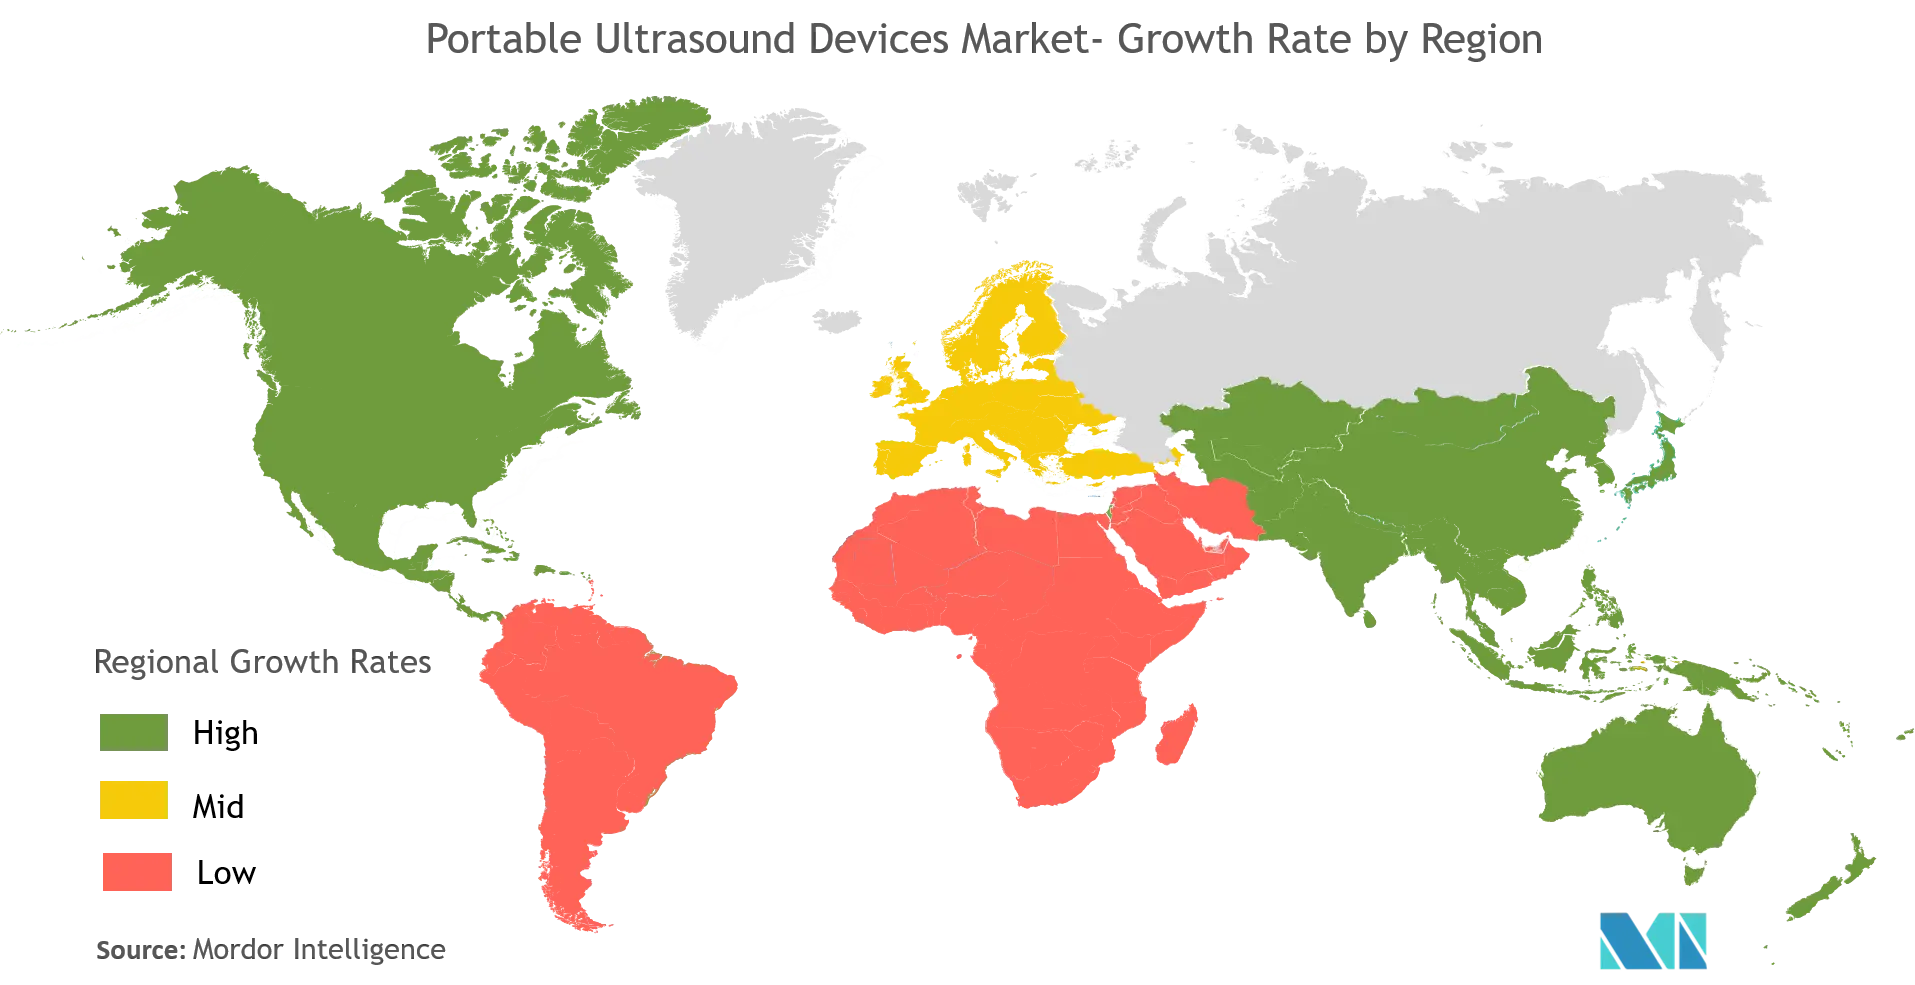 Portable Ultrasound Devices Market Analysis